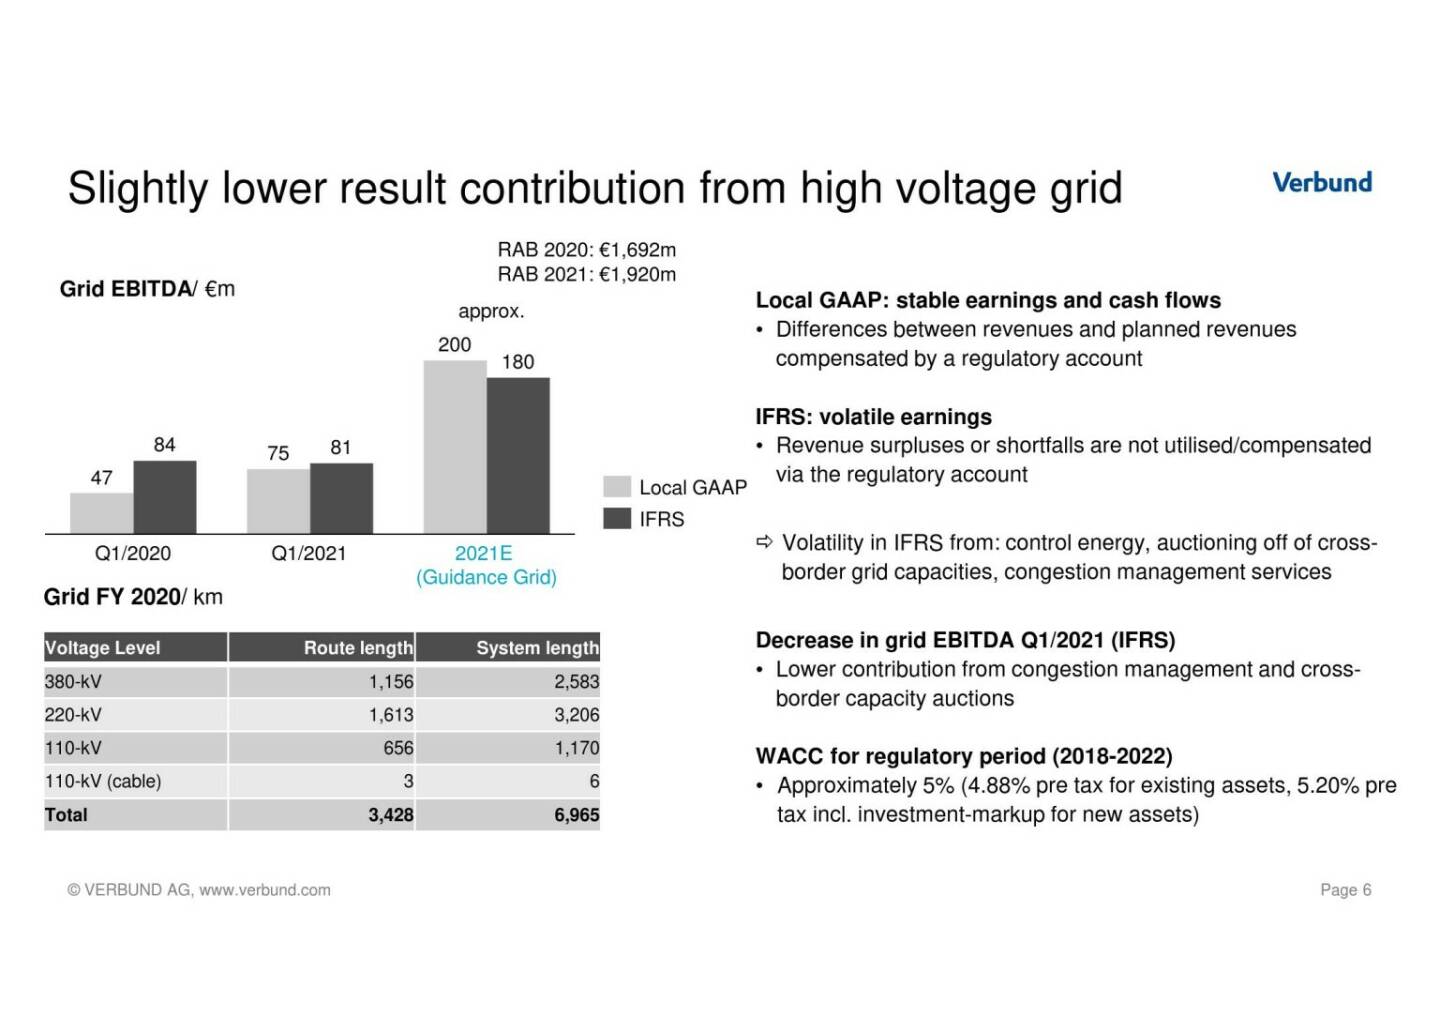 Verbund - Slightly lower result contribution from high voltage grid 